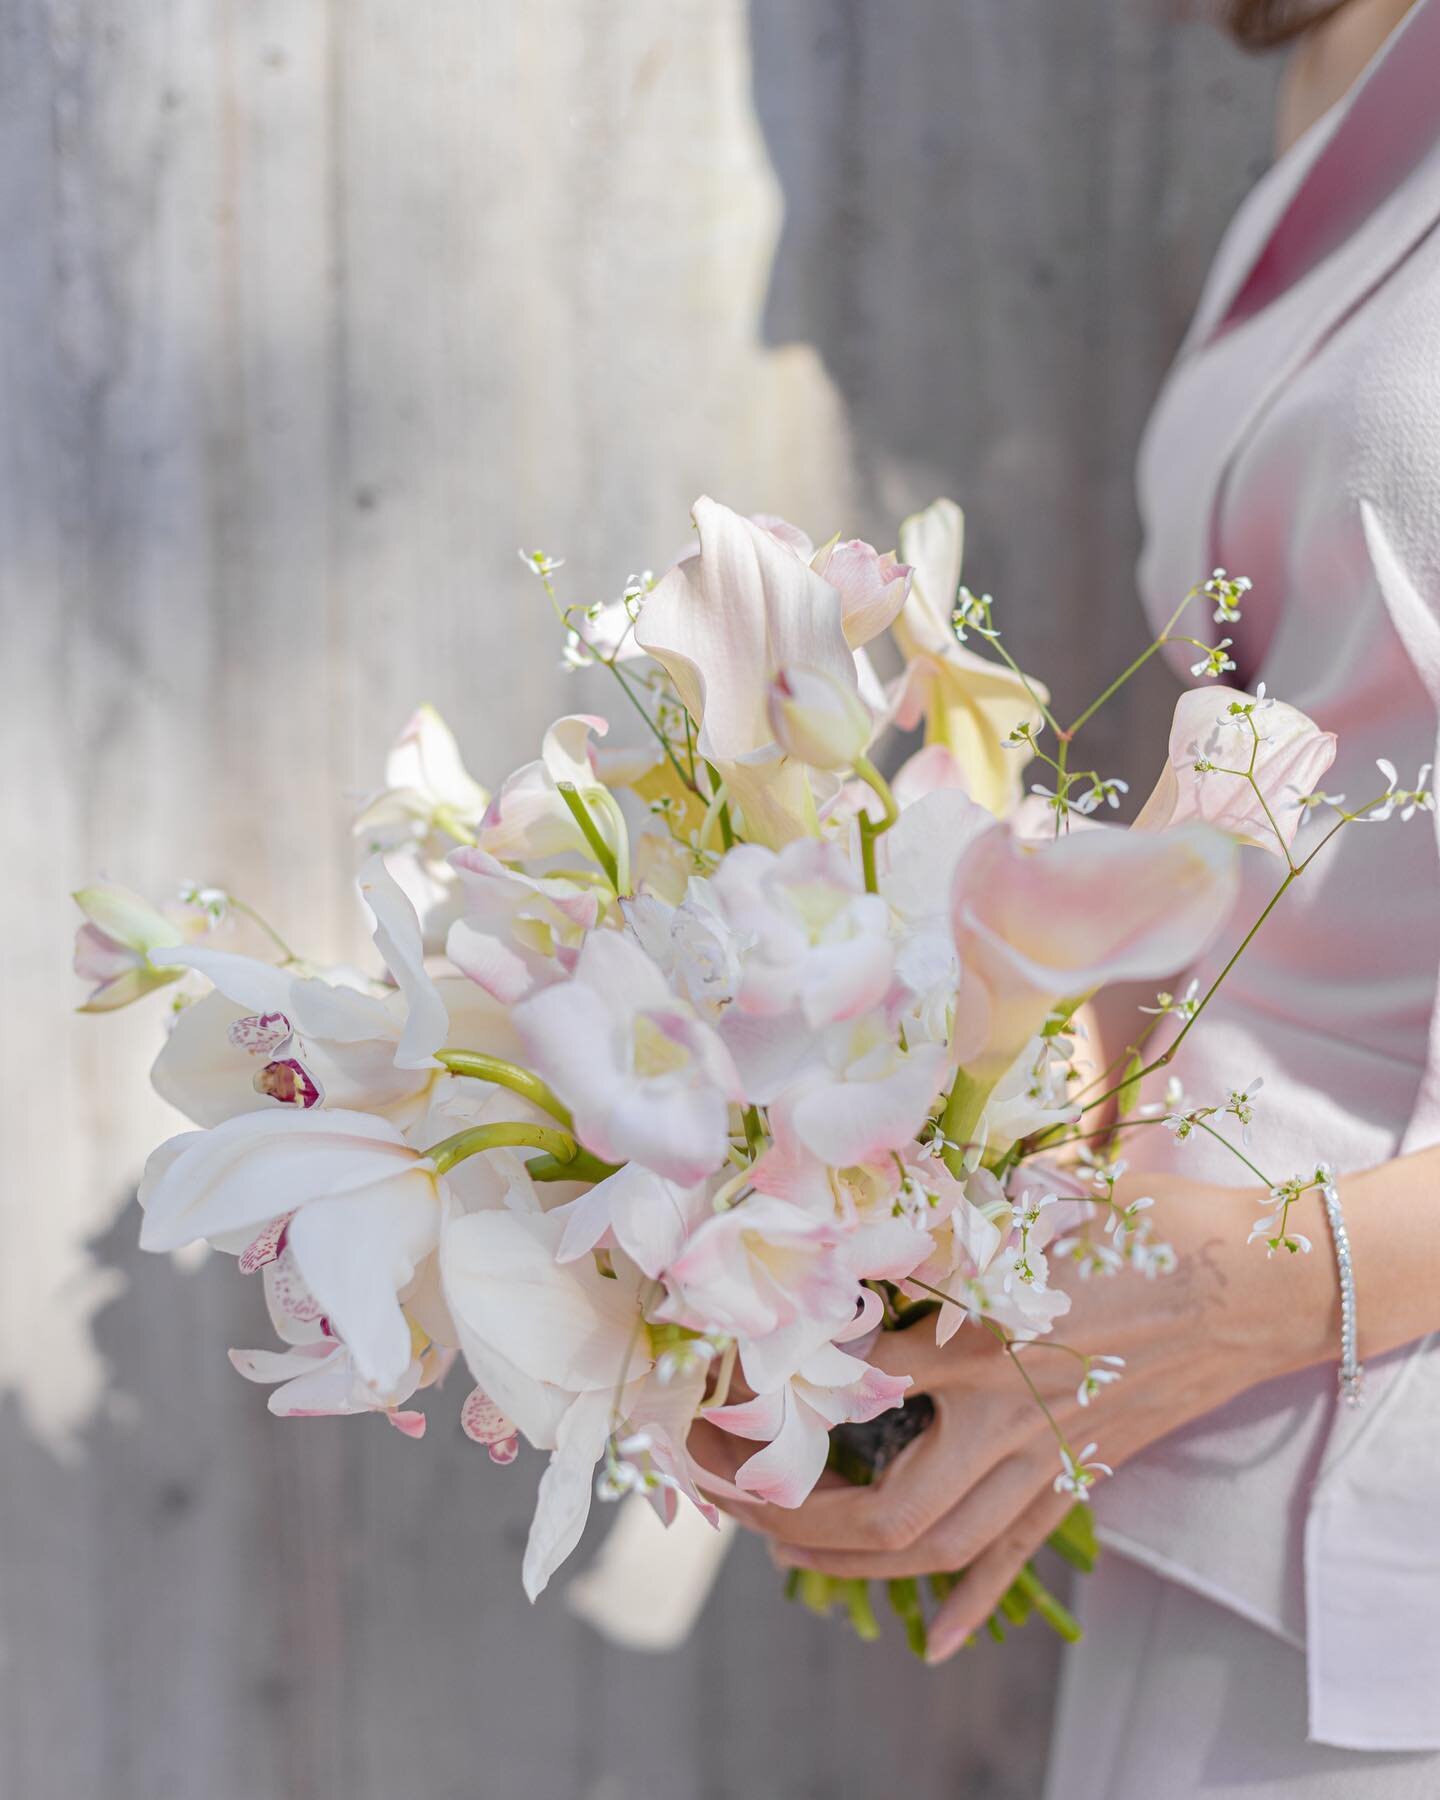 Happy Friday.💐💐The pink dendrobium, cally lily and cymbidium bouquet is perfect for our elegant bride.😆
.
#sandiegoflorist #losangelesflorist #socalflorist #bridalbouquet